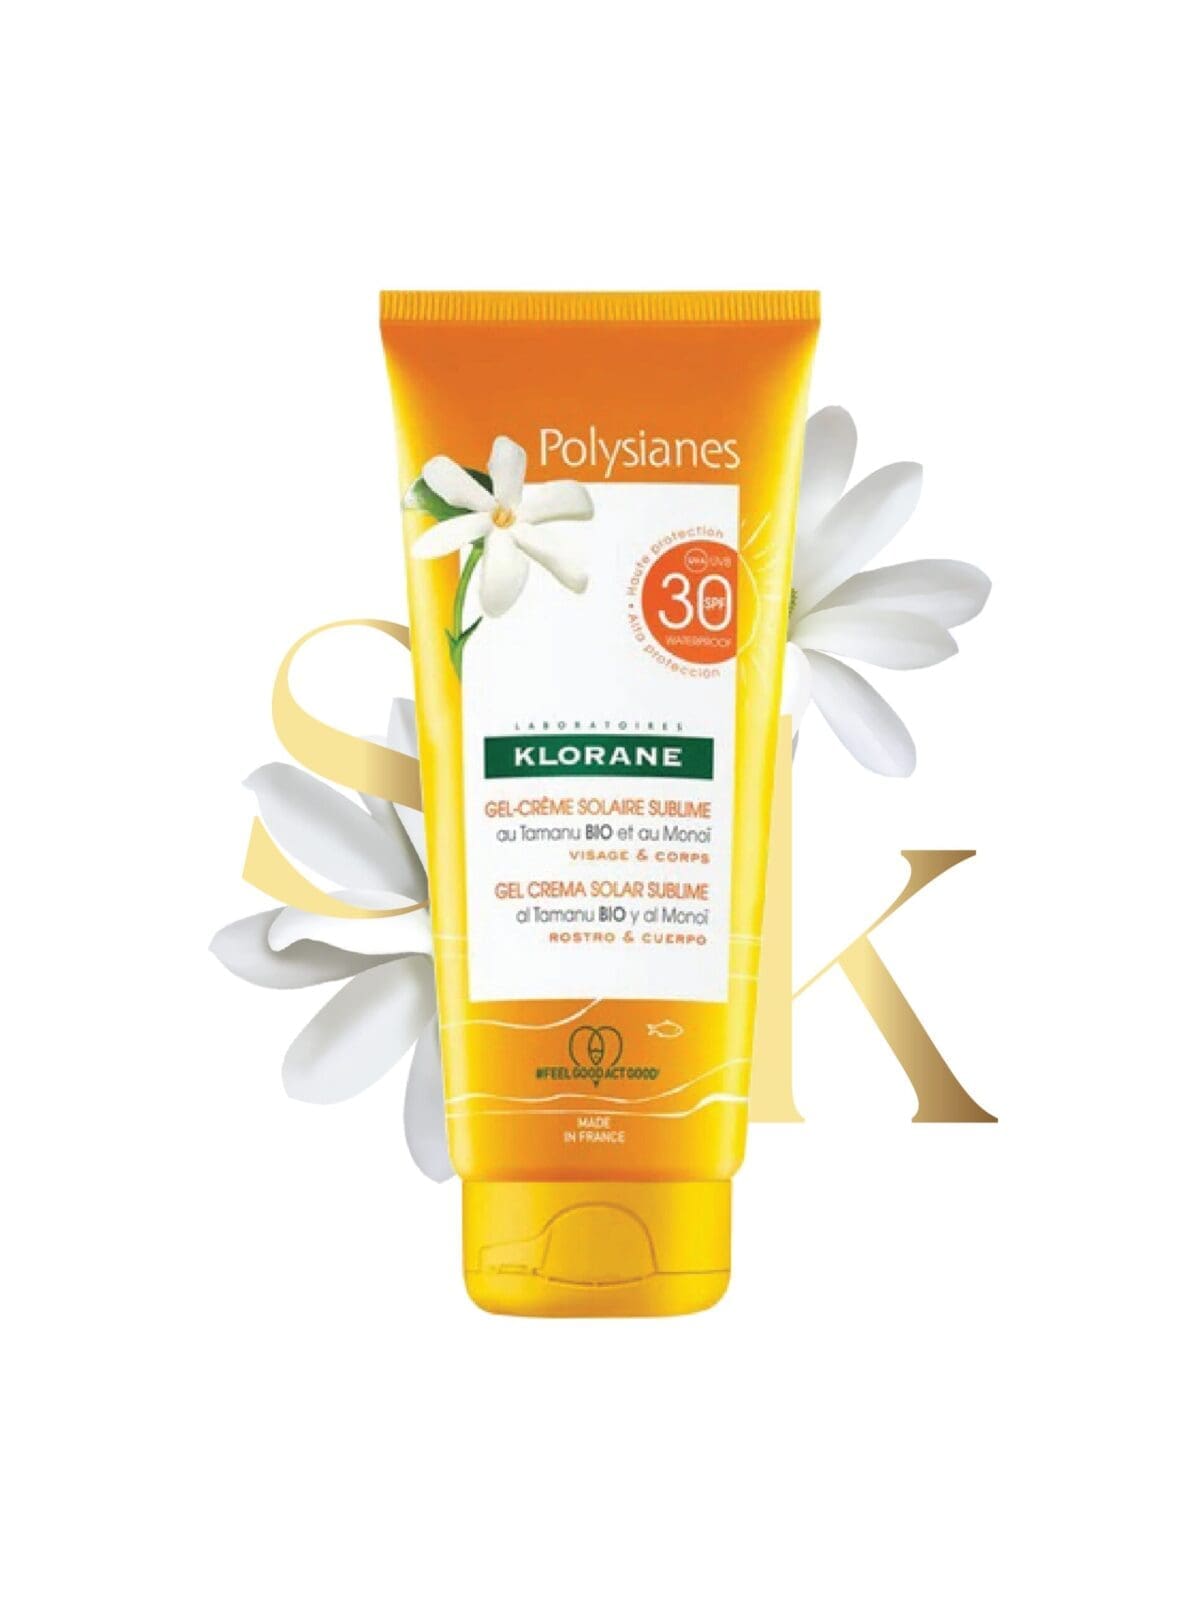 Klorane-sunscreen-protection-uv-face-body